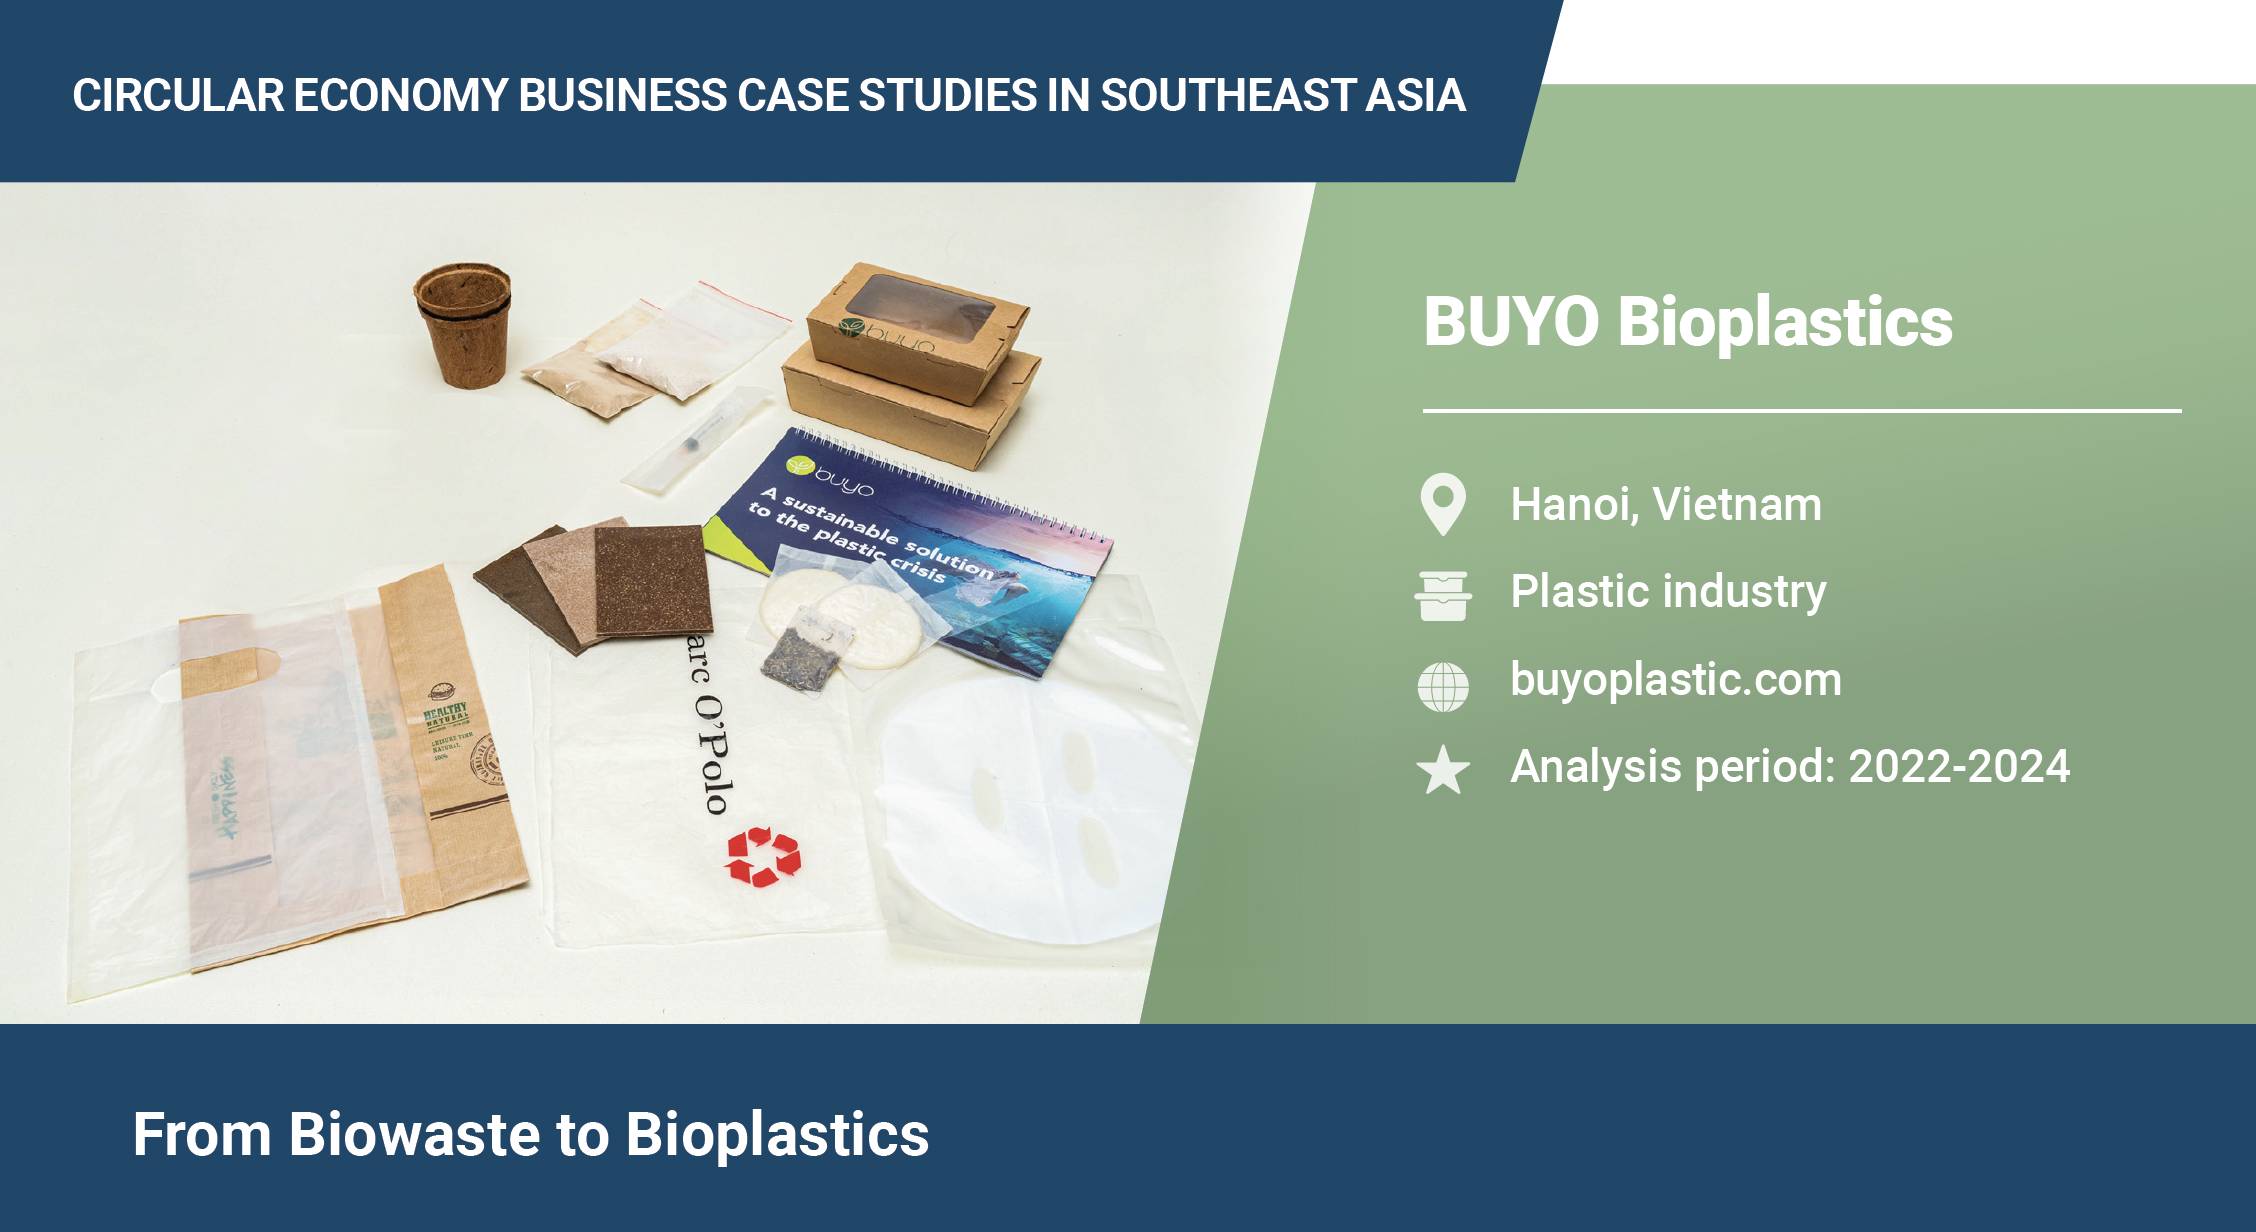 BUYO Bioplastics